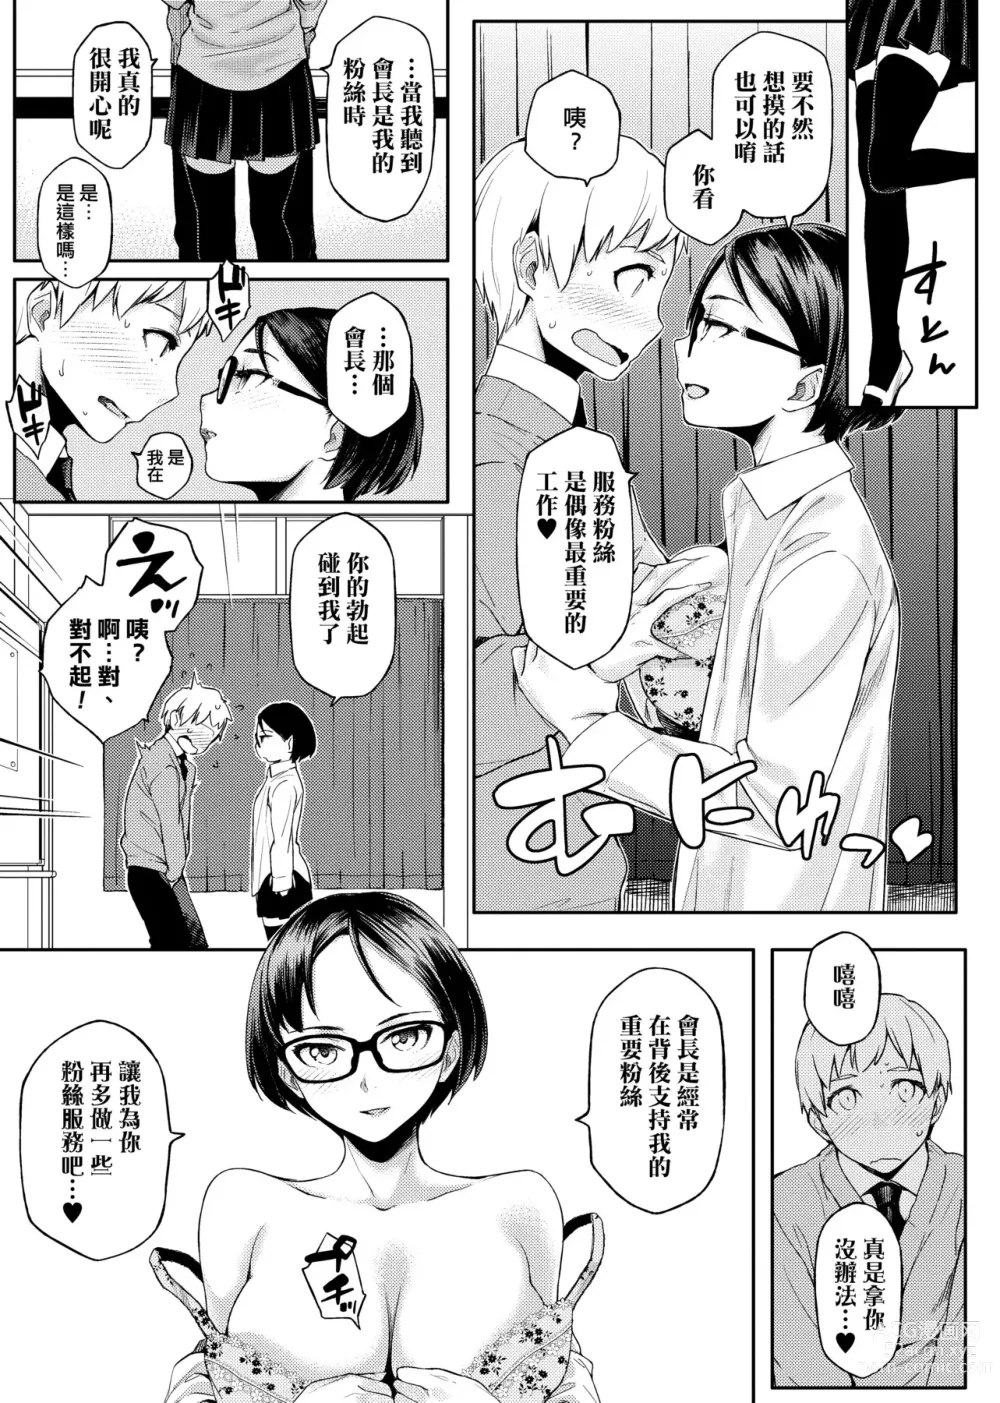 Page 220 of manga Natsu Koi Ota Girl - What Brings You to Japan?